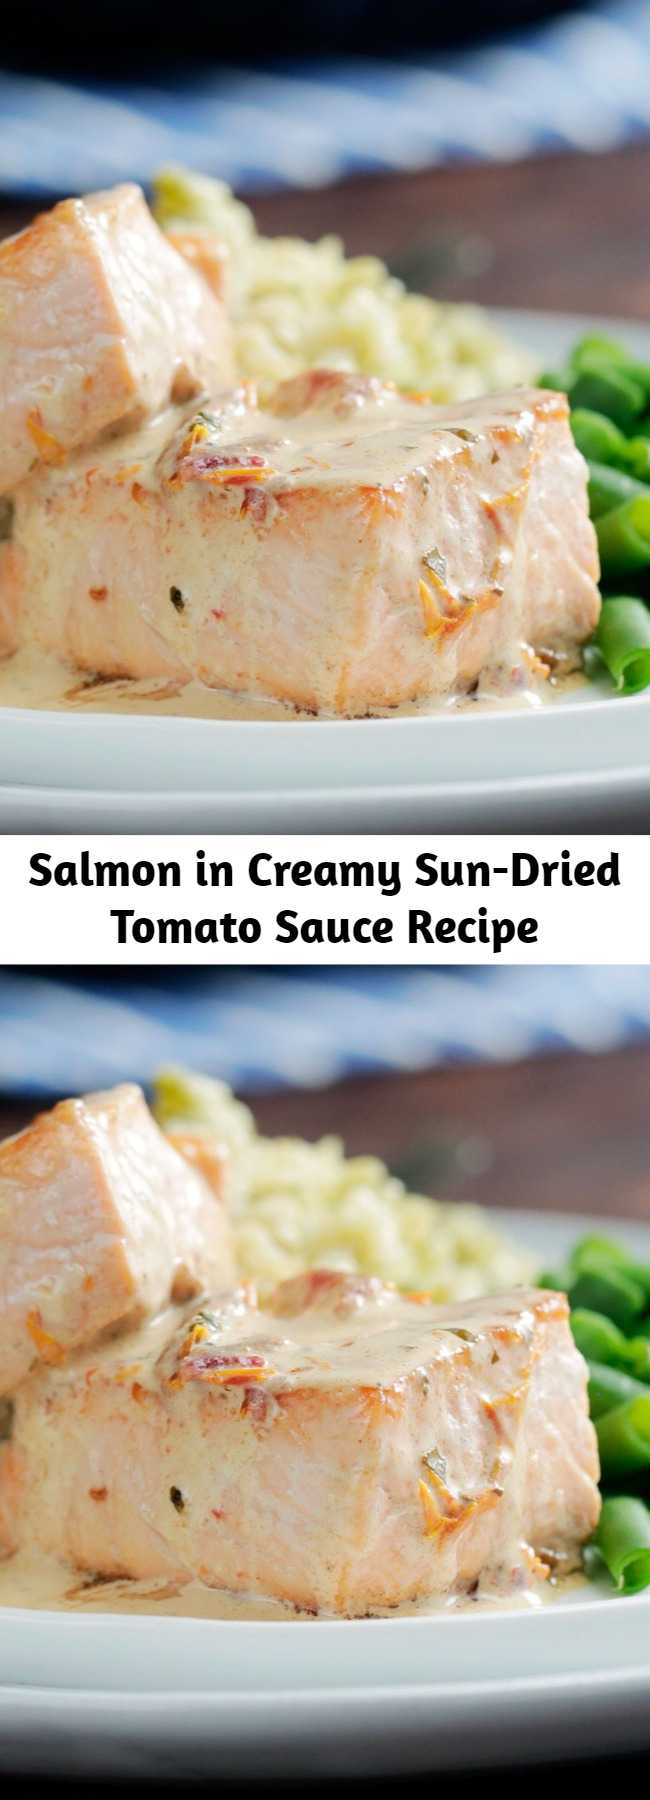 Salmon in Creamy Sun-Dried Tomato Sauce Recipe - Layer on the flavor with a creamy sun-dried tomato sauce over lightly seasoned sauteed salmon.